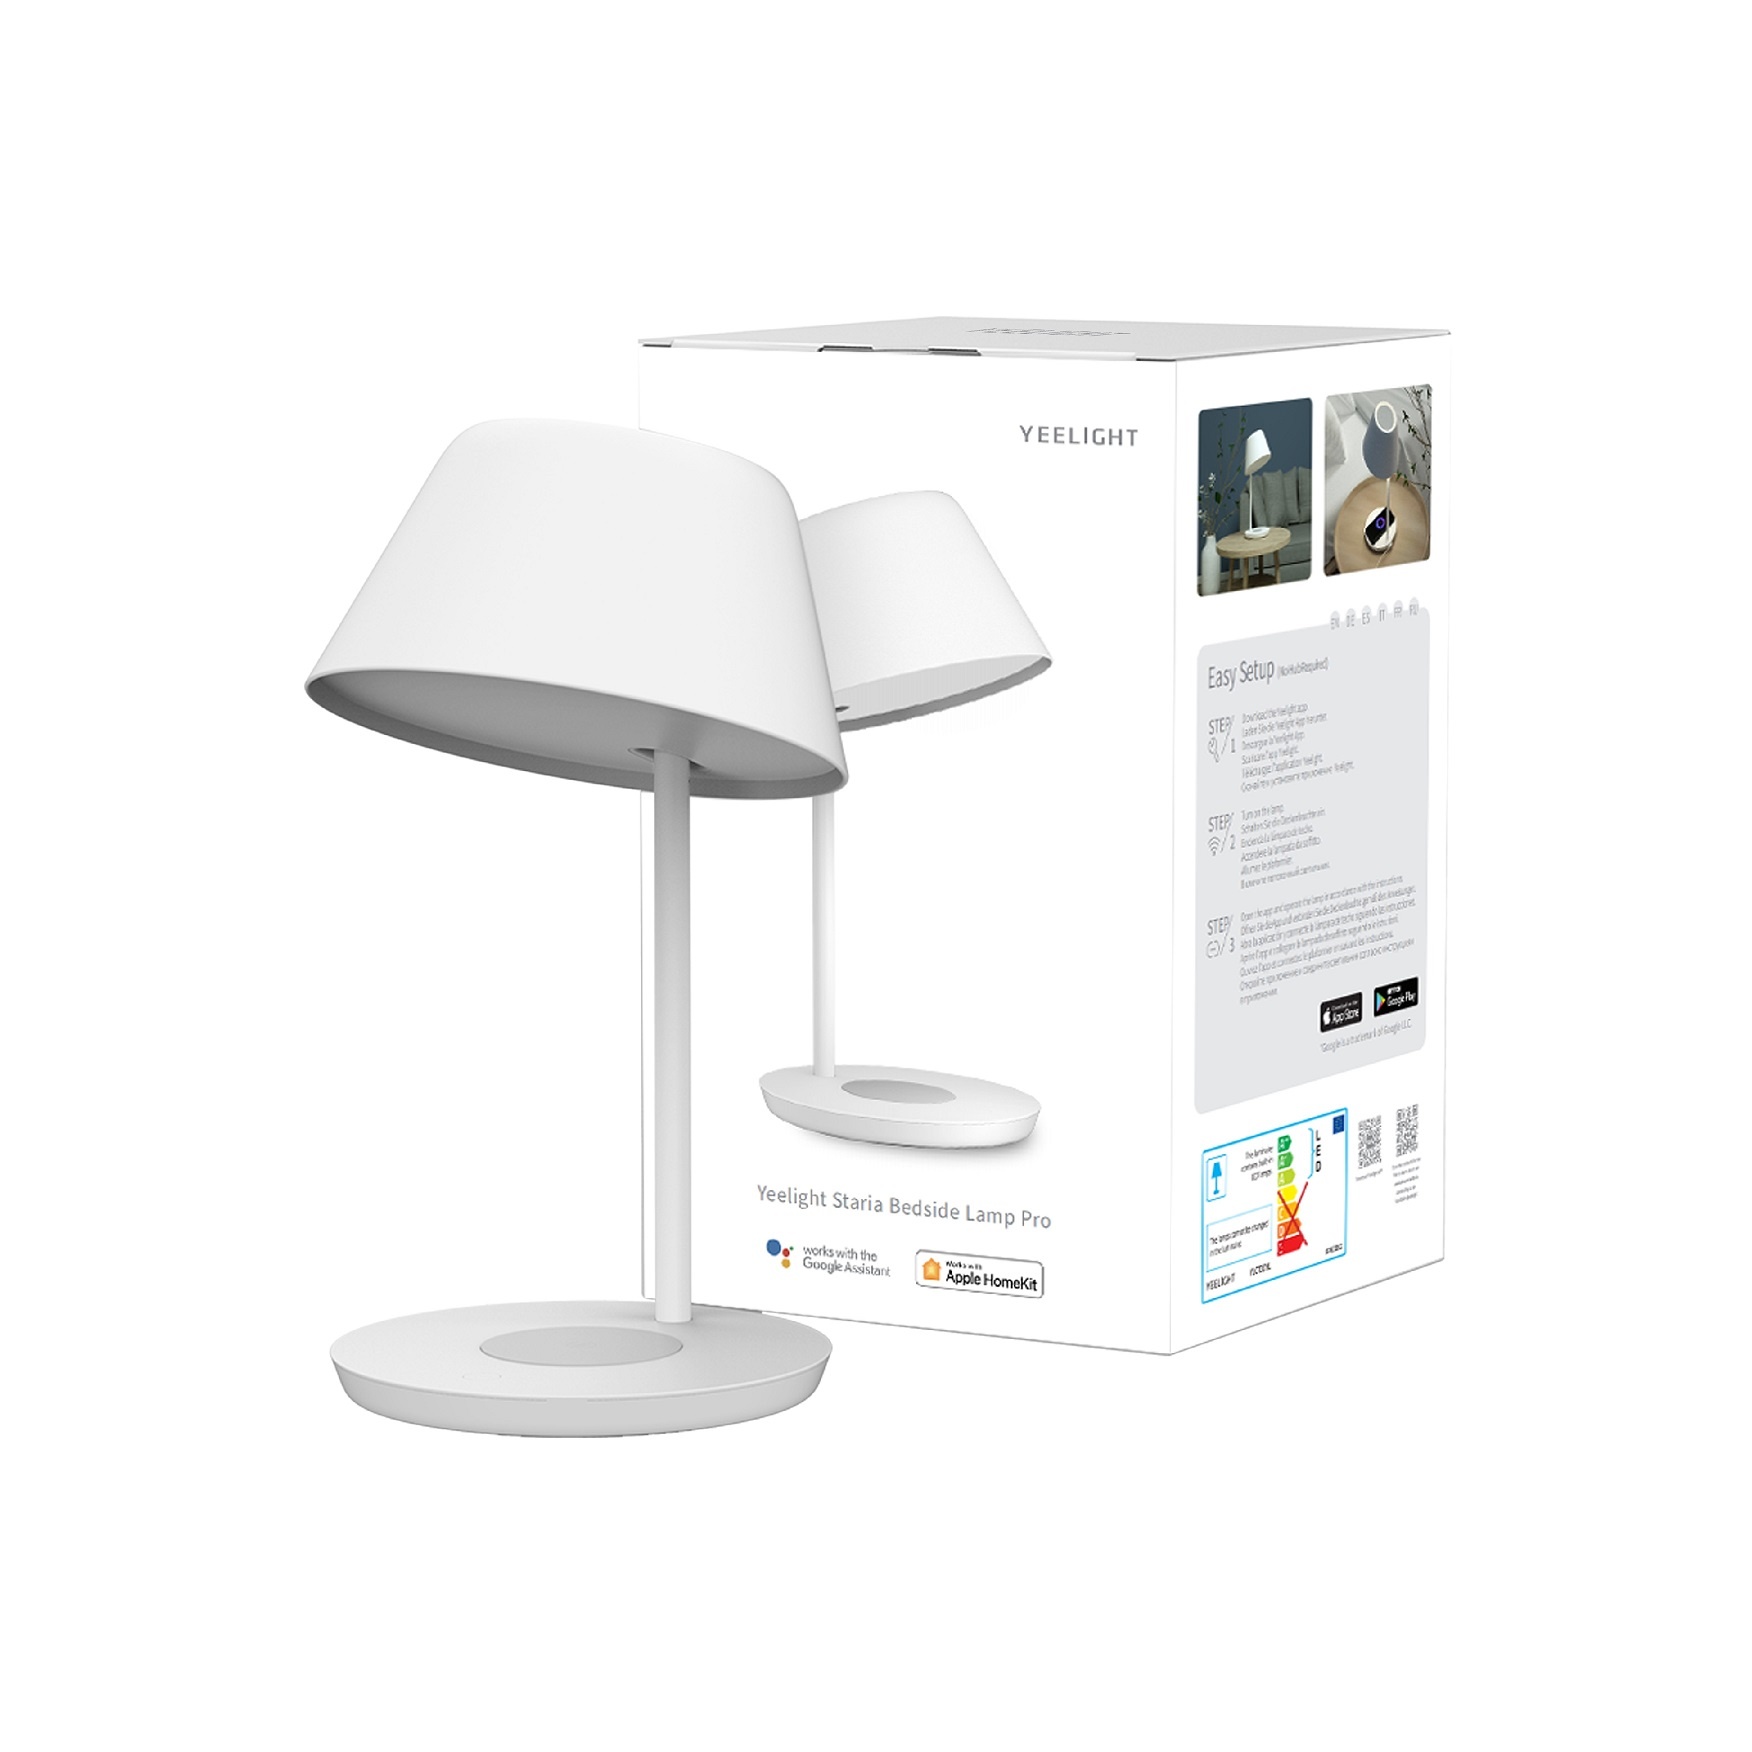 Xiaomi presenta la nuova lampada Yeelight Eye Lamp Pro e un mini tapis  roulant